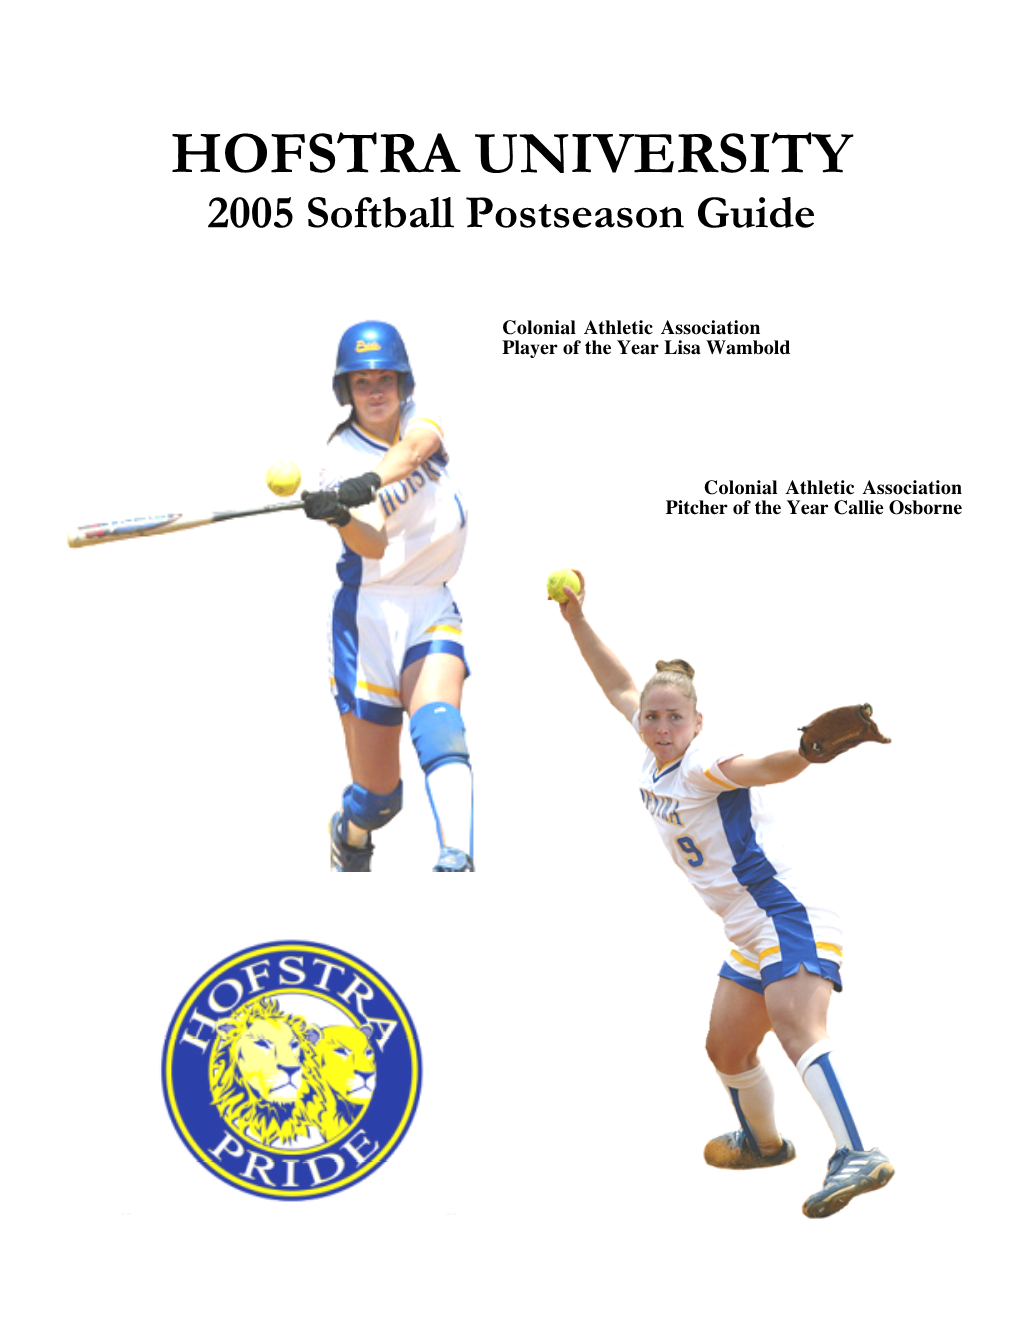 HOFSTRA UNIVERSITY 2005 Softball Postseason Guide